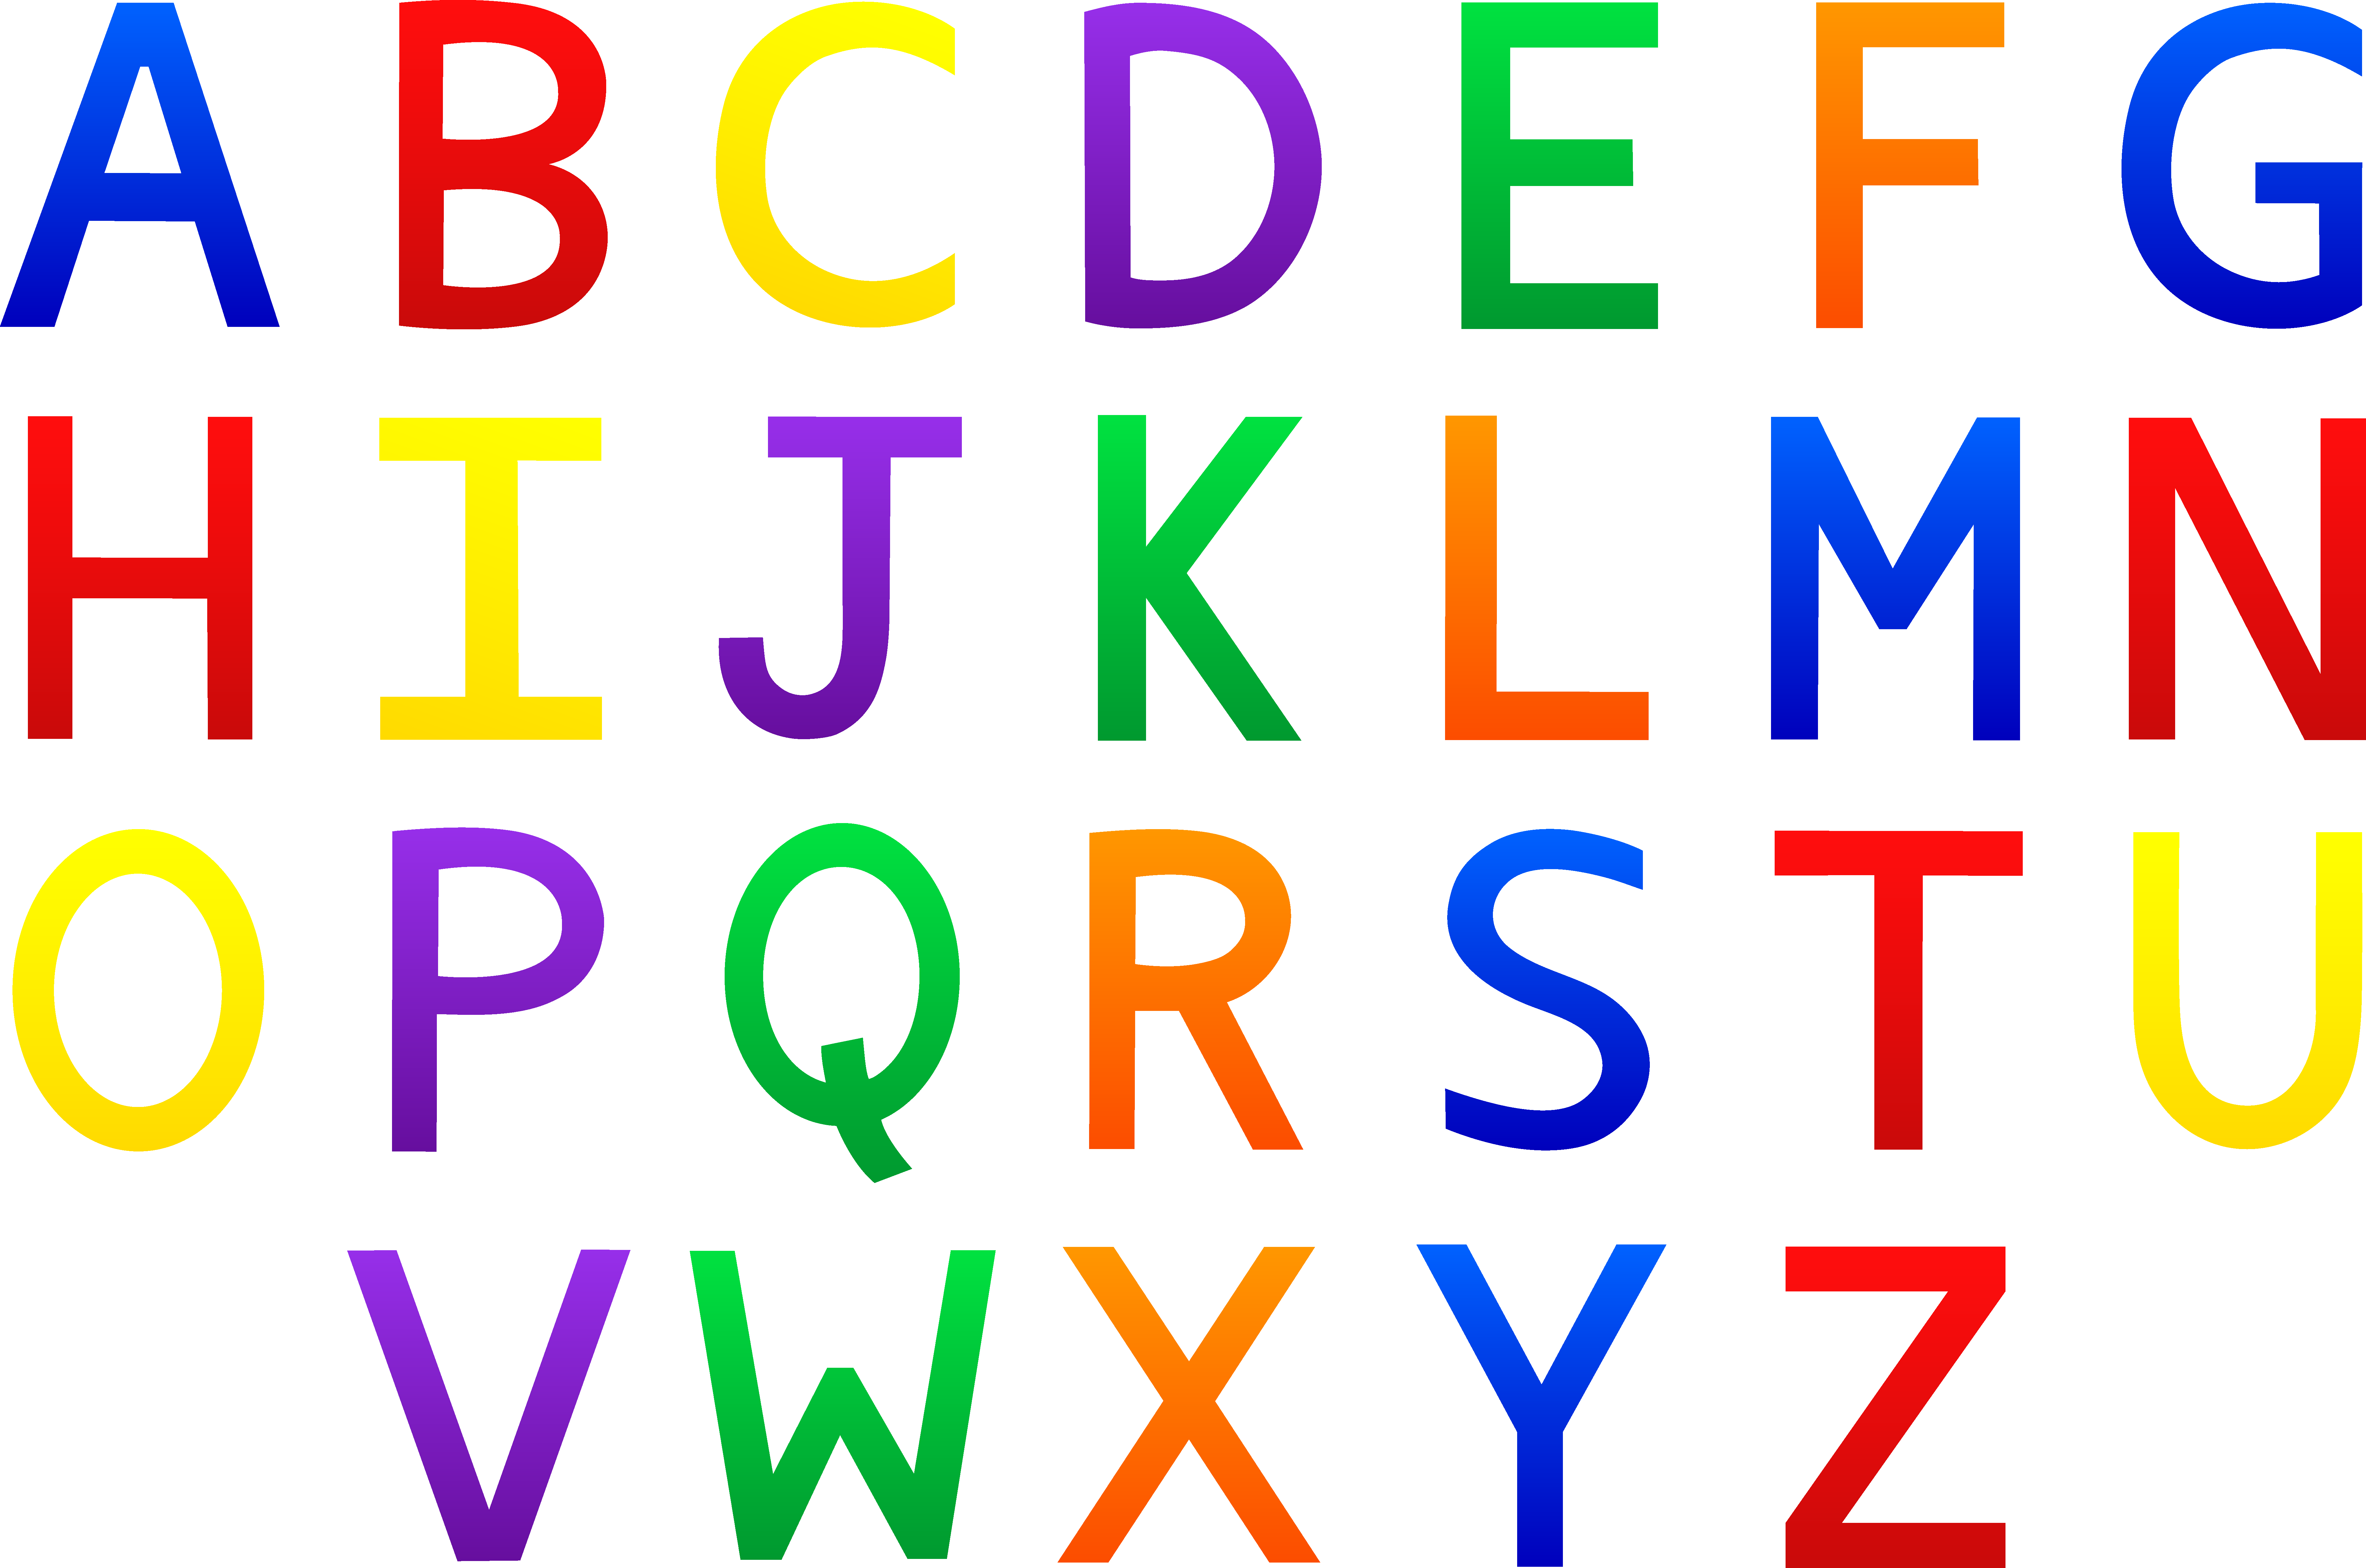 Amazing Alphabet Pictures & Backgrounds